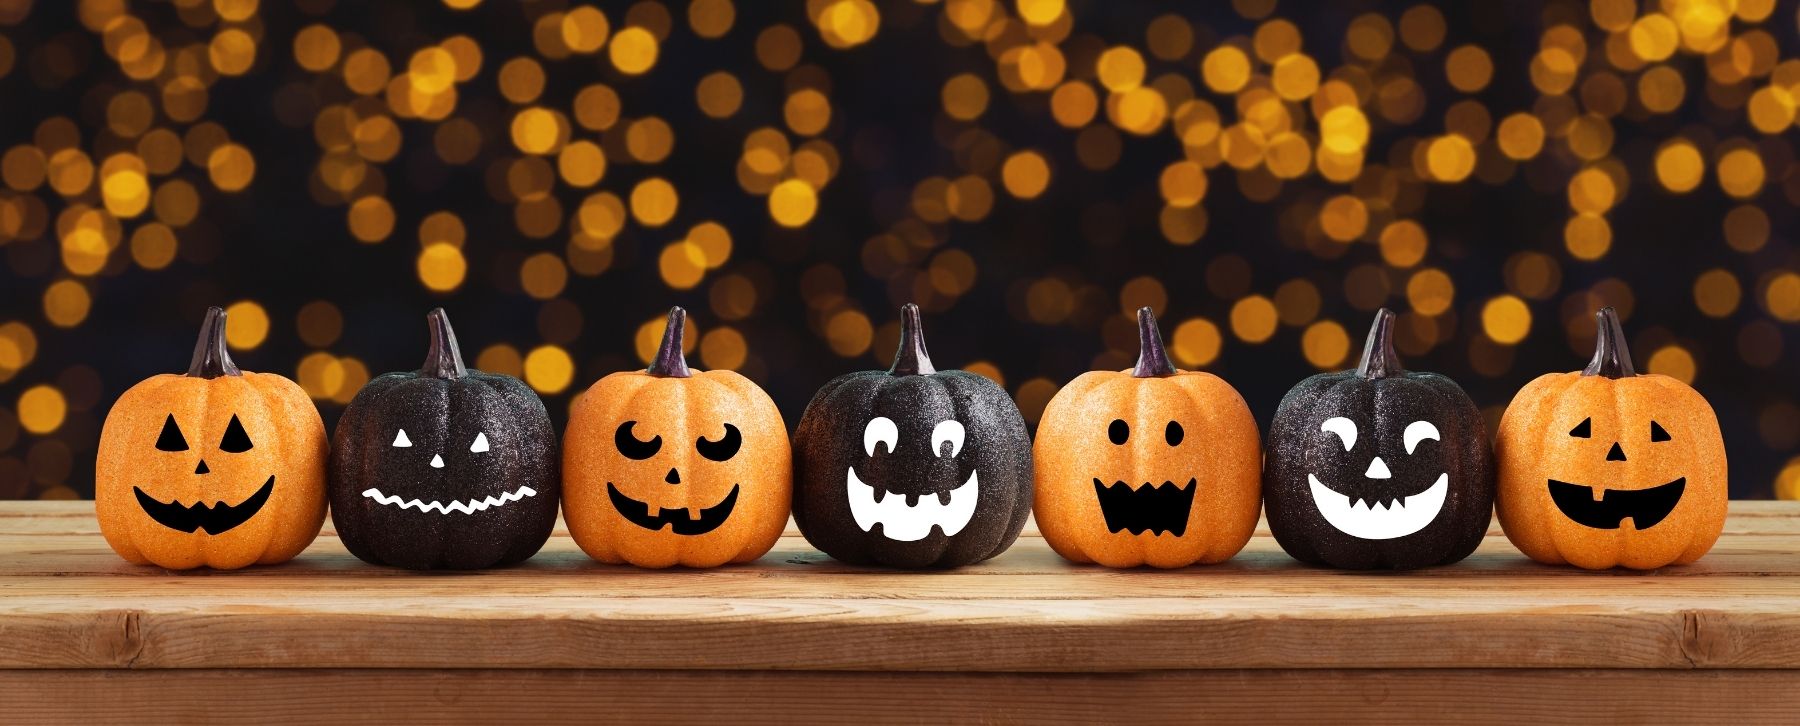 Happy Halloween, Everyone! (Painted Jack O' Lanterns)